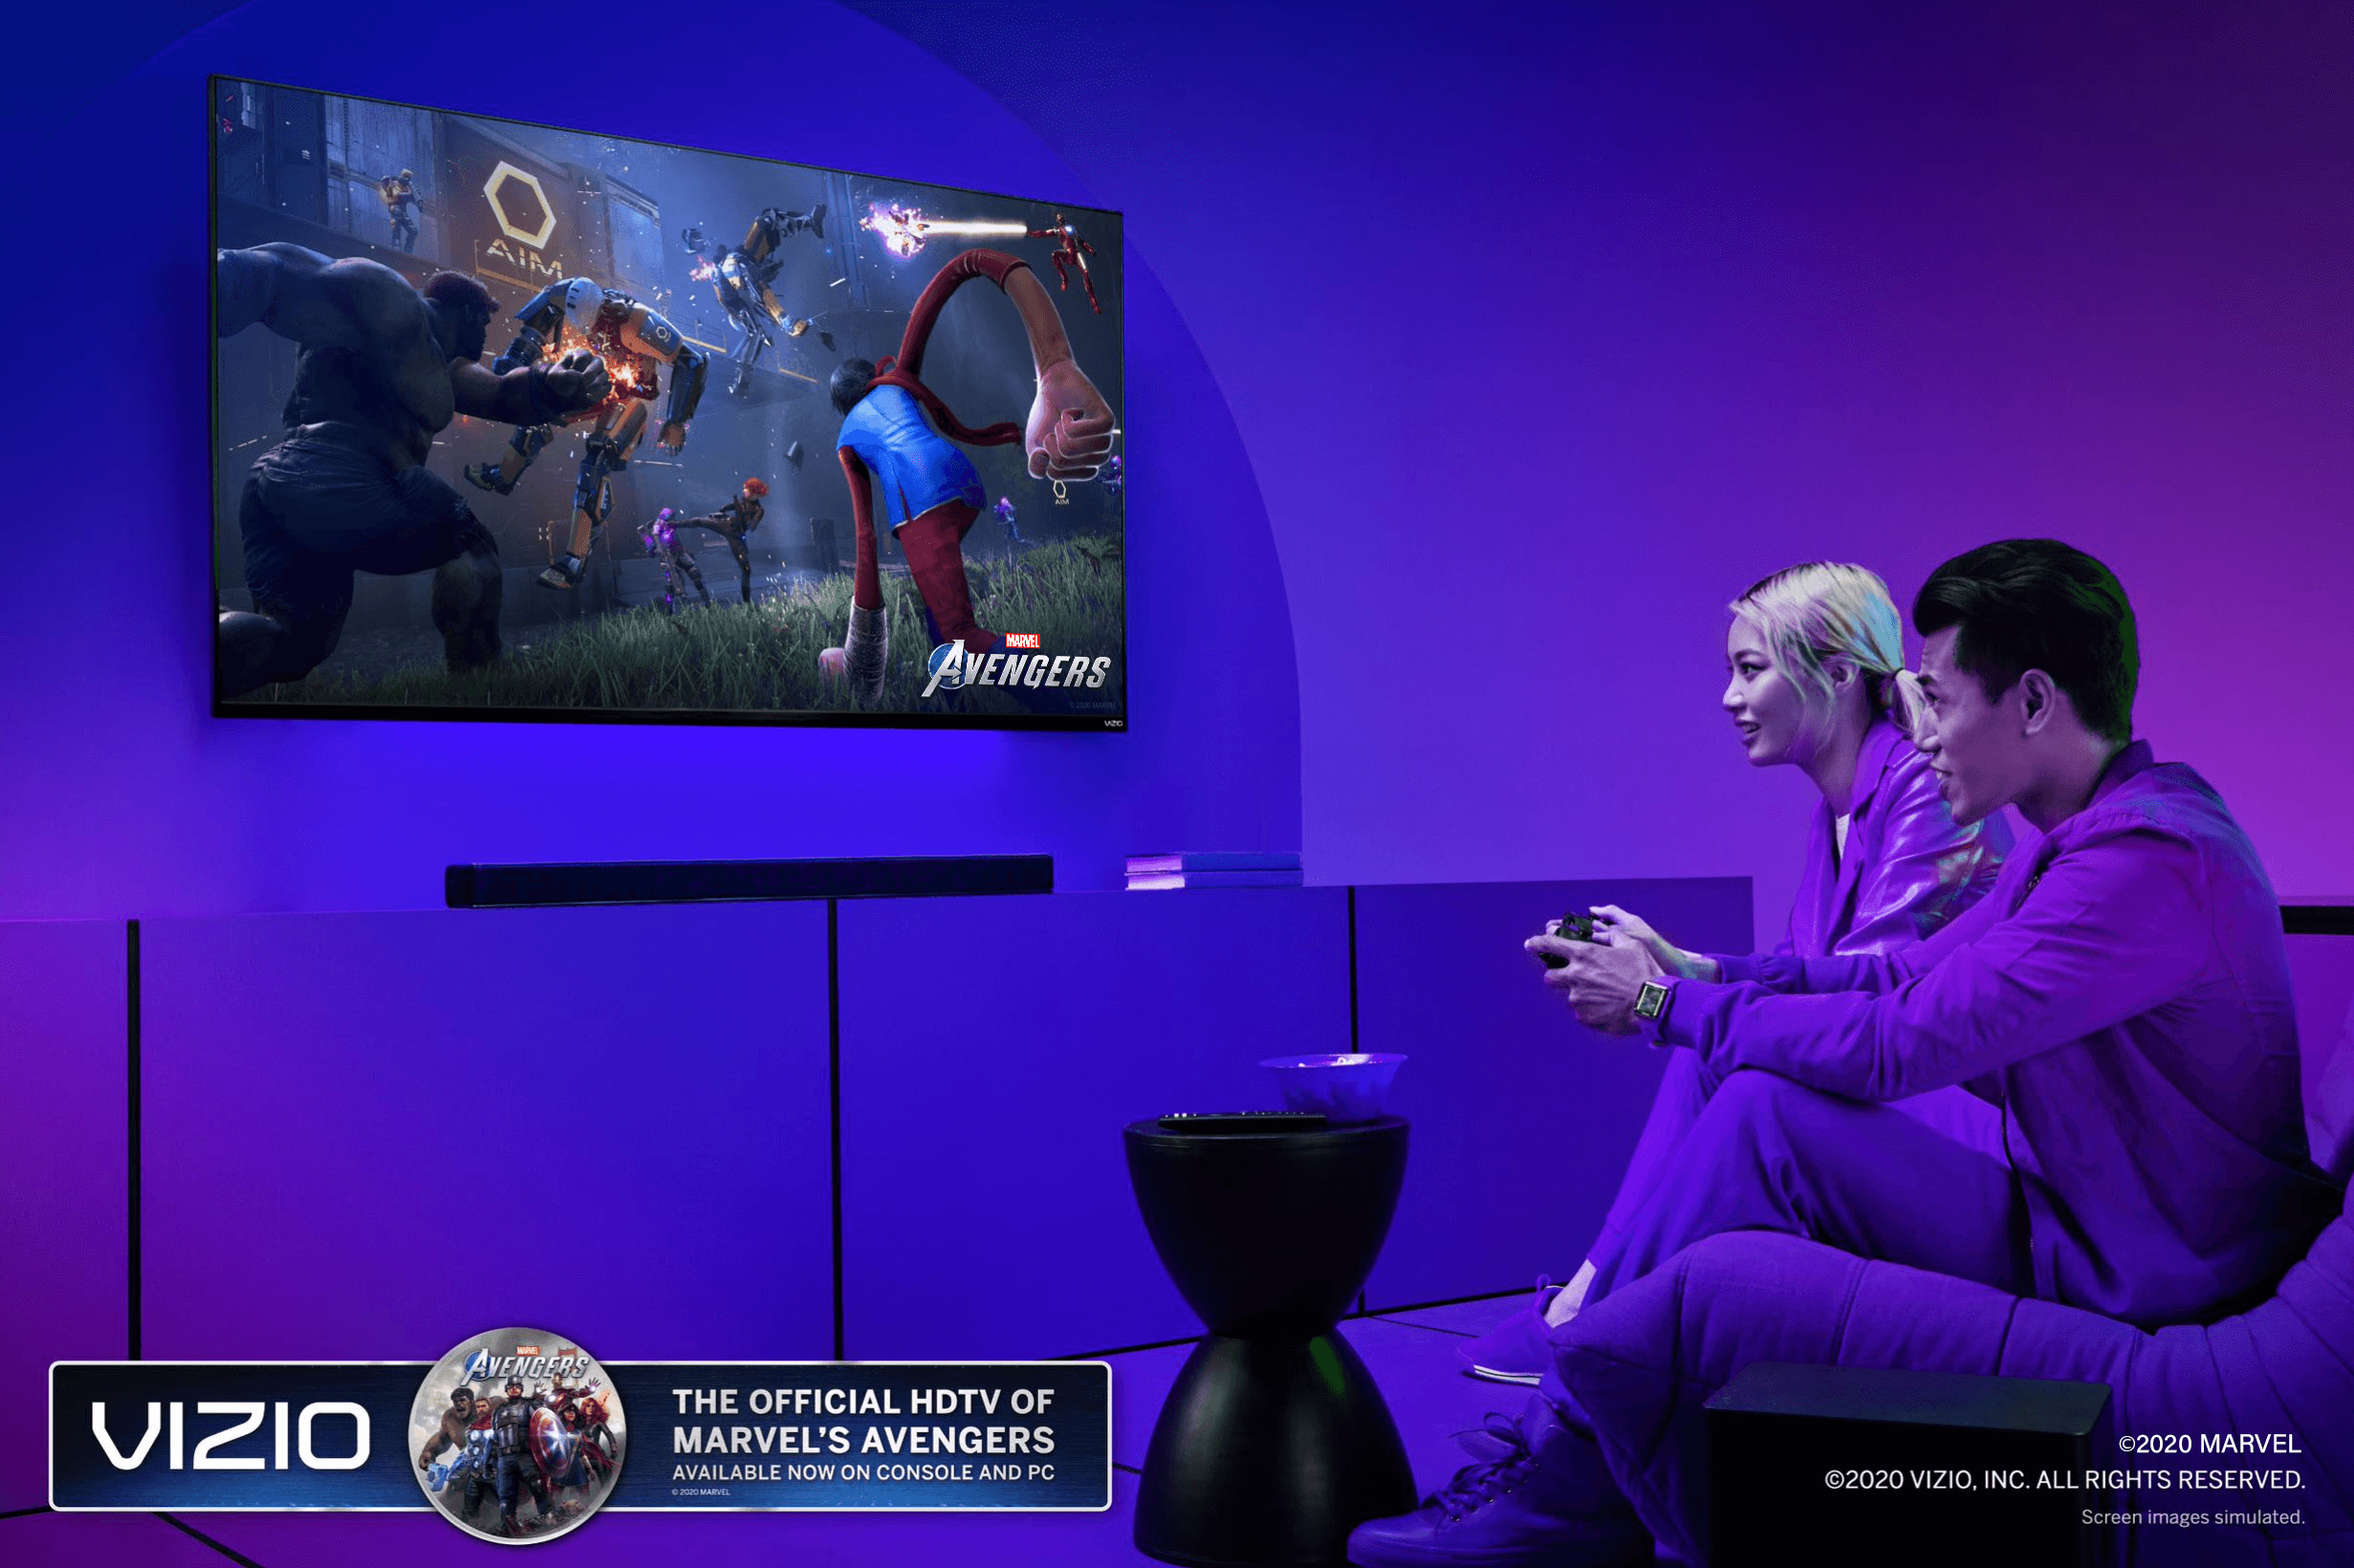 Vizio Will Be the Official HDTV Sound Bar Partner for Marvel’s Avengers Video Game